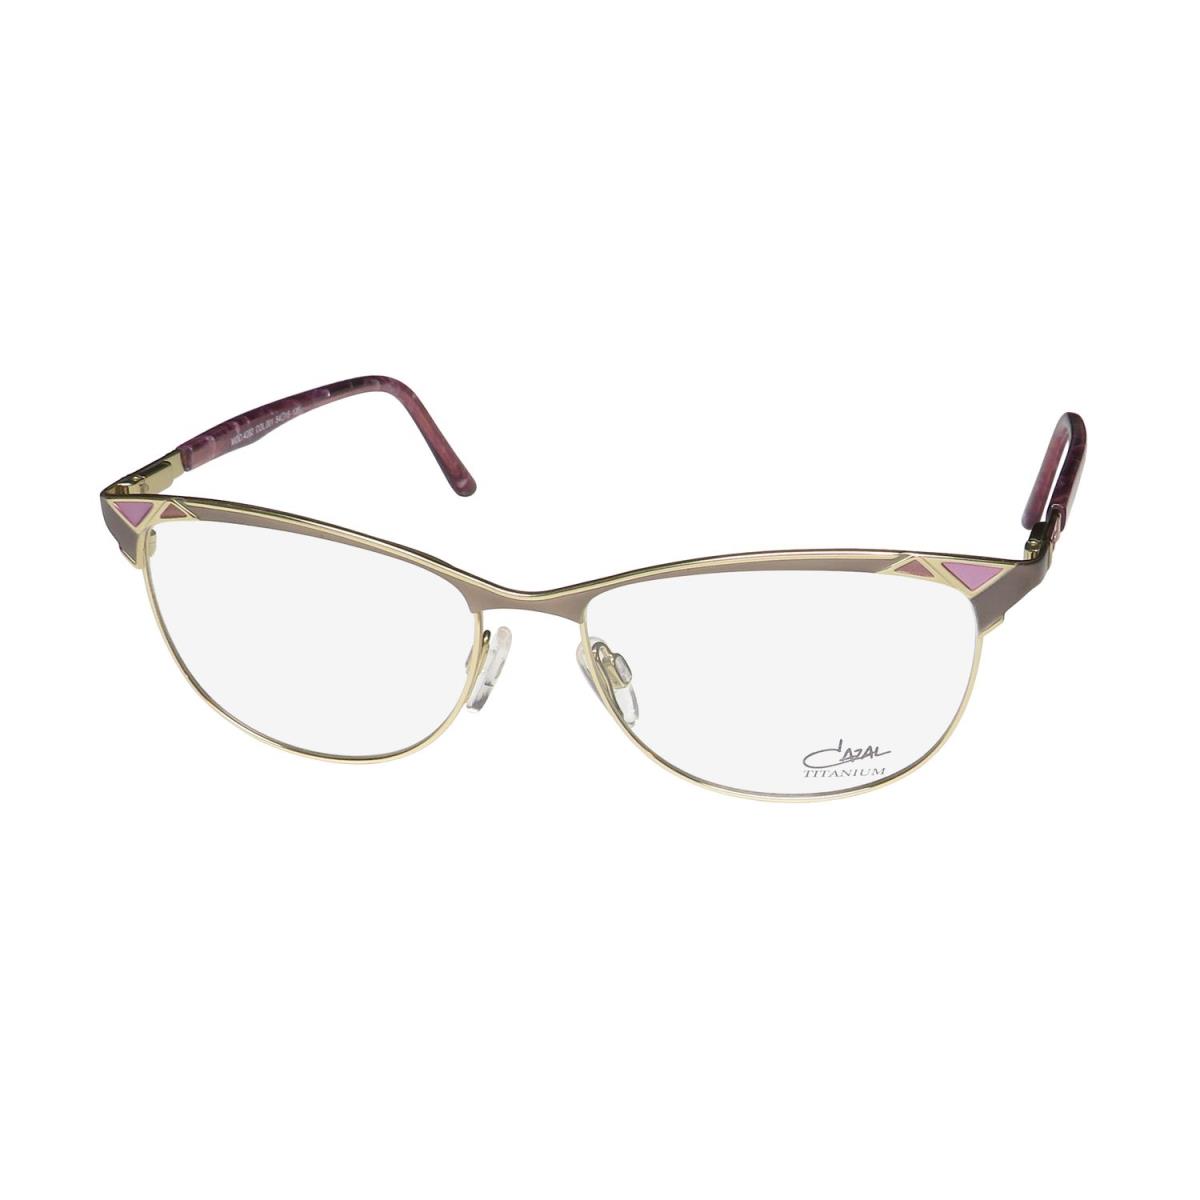 Cazal 4282 Titanium Metal Made IN Germany Modern Eyeglass Frame/glasses Gold / Gray / Fuchsia